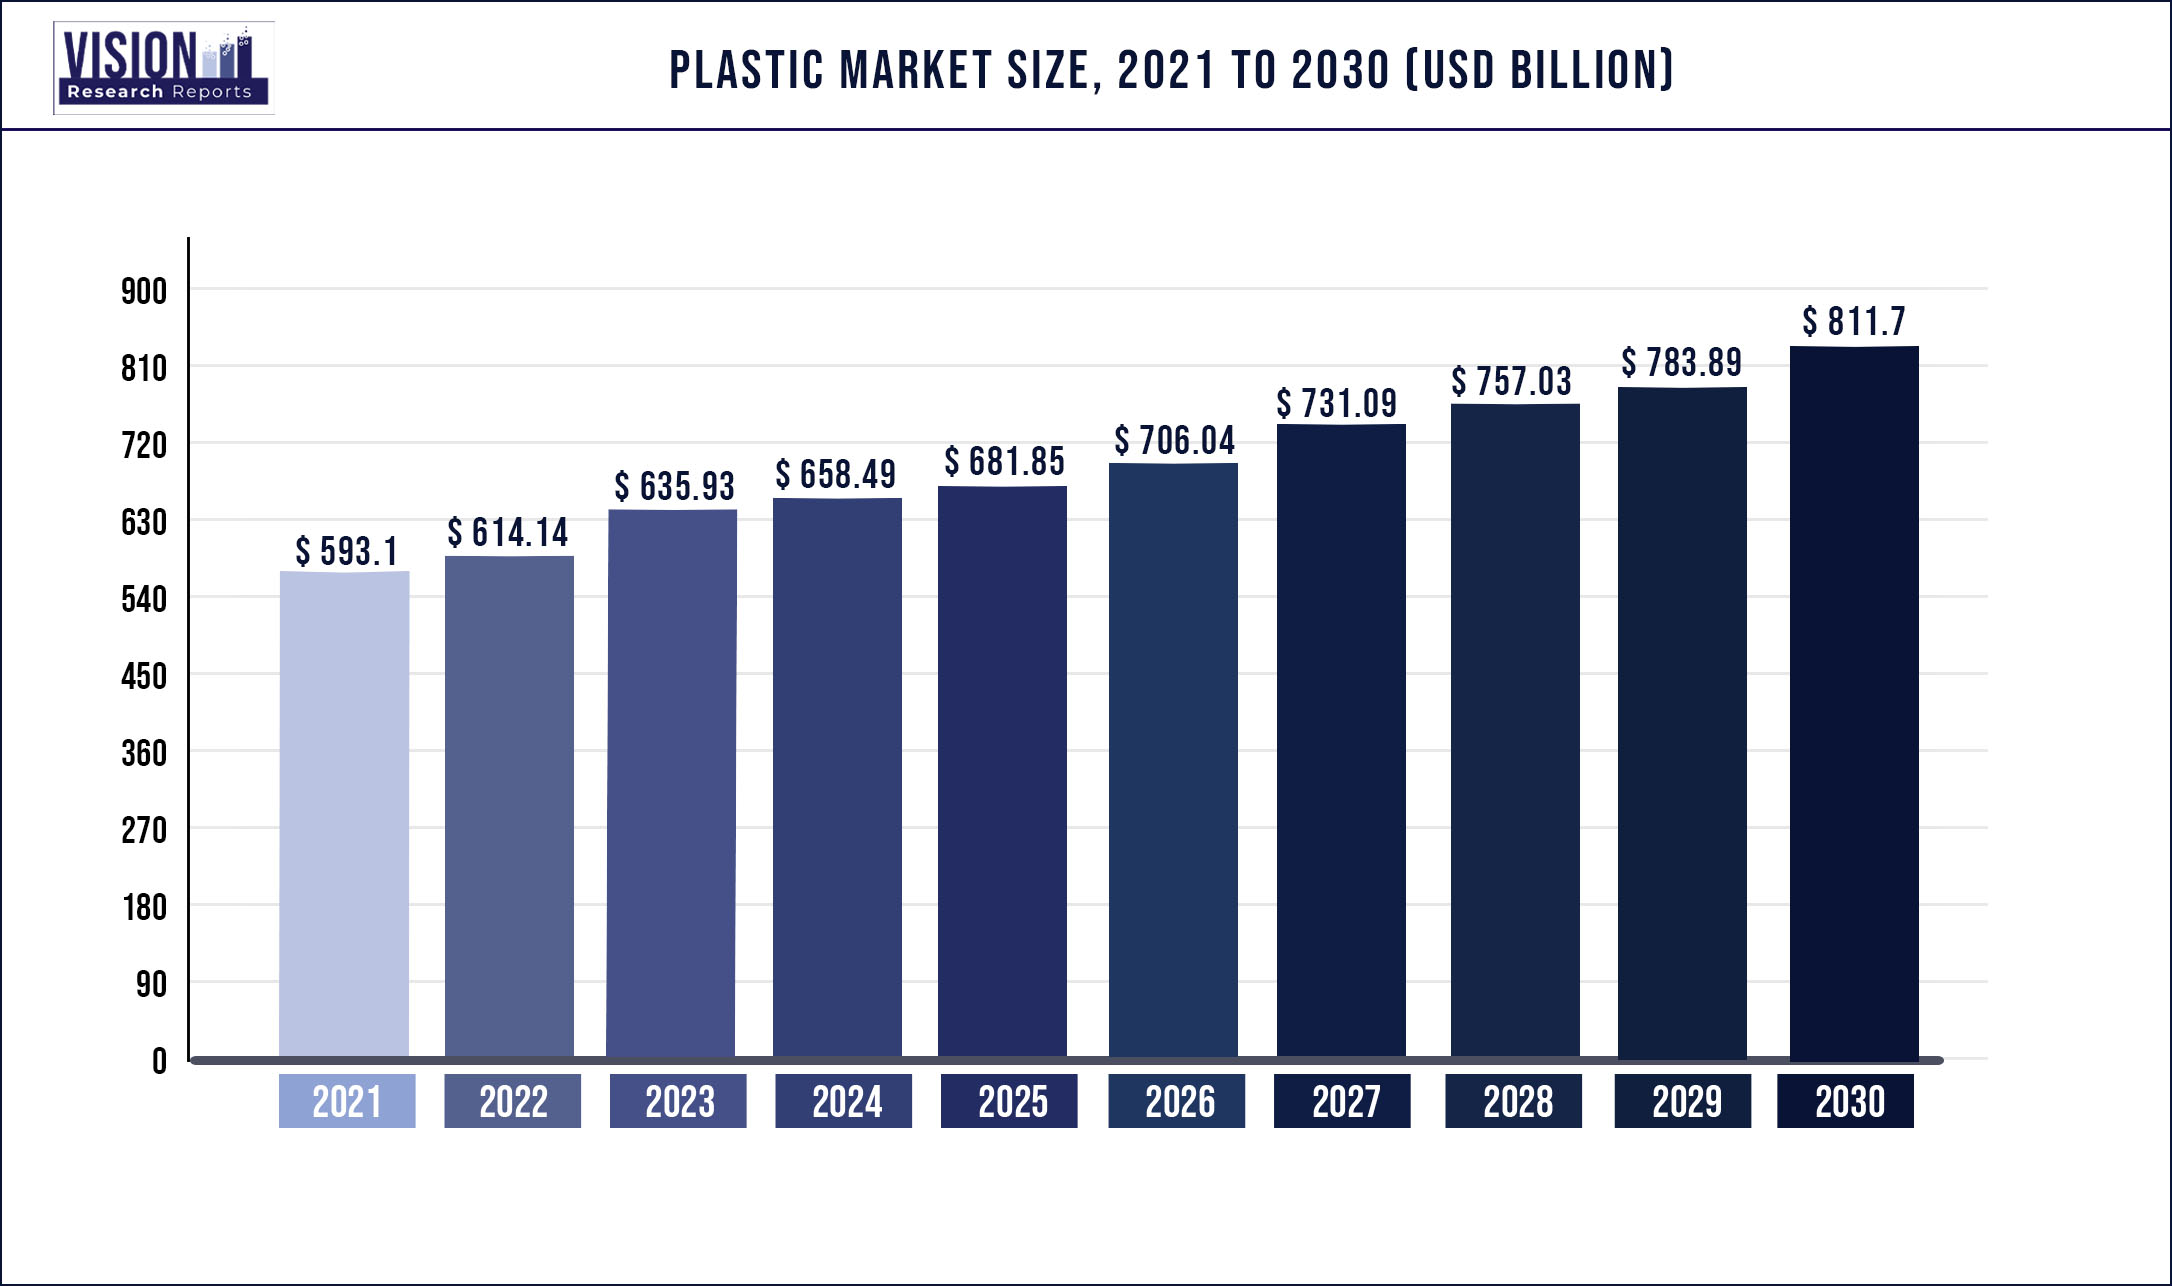 Plastic Market Size 2021 to 2030